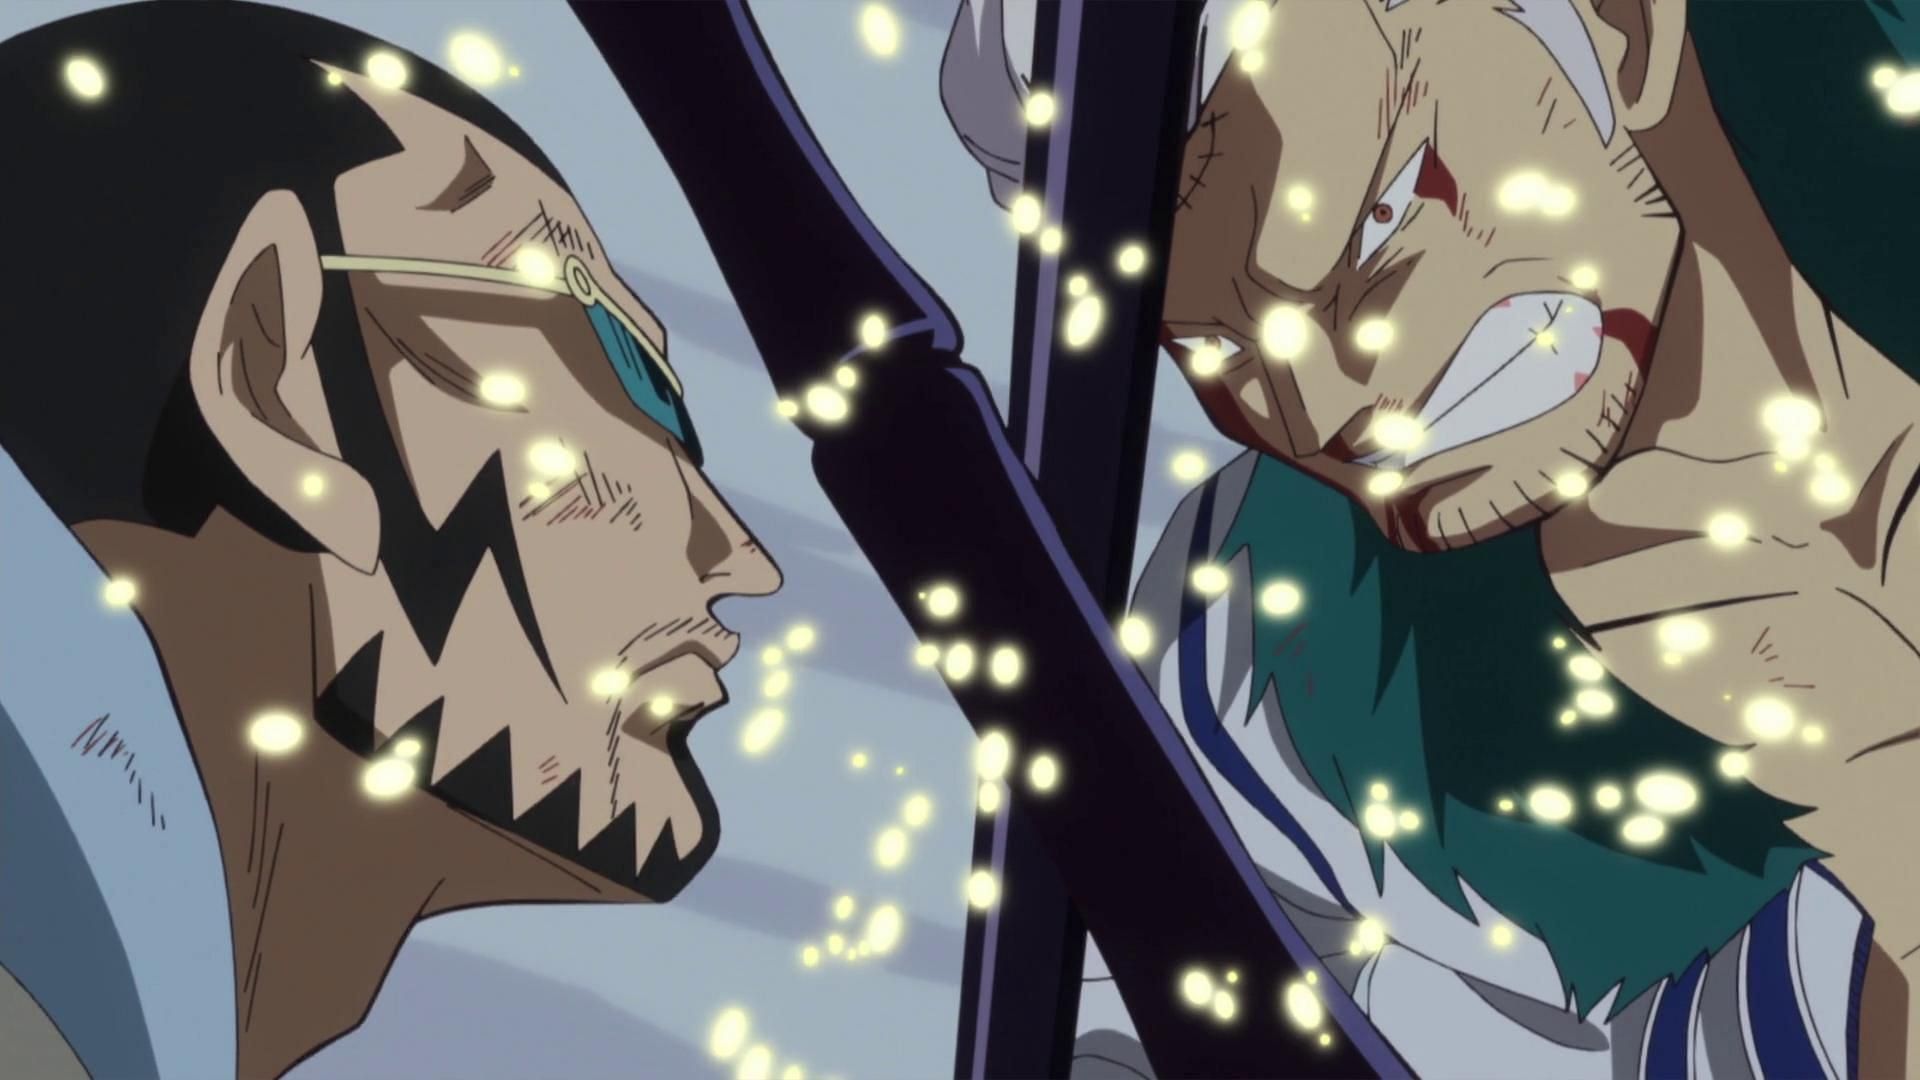 Vergo vs Smoker as seen in the One Piece anime (Image via Toei Animation)